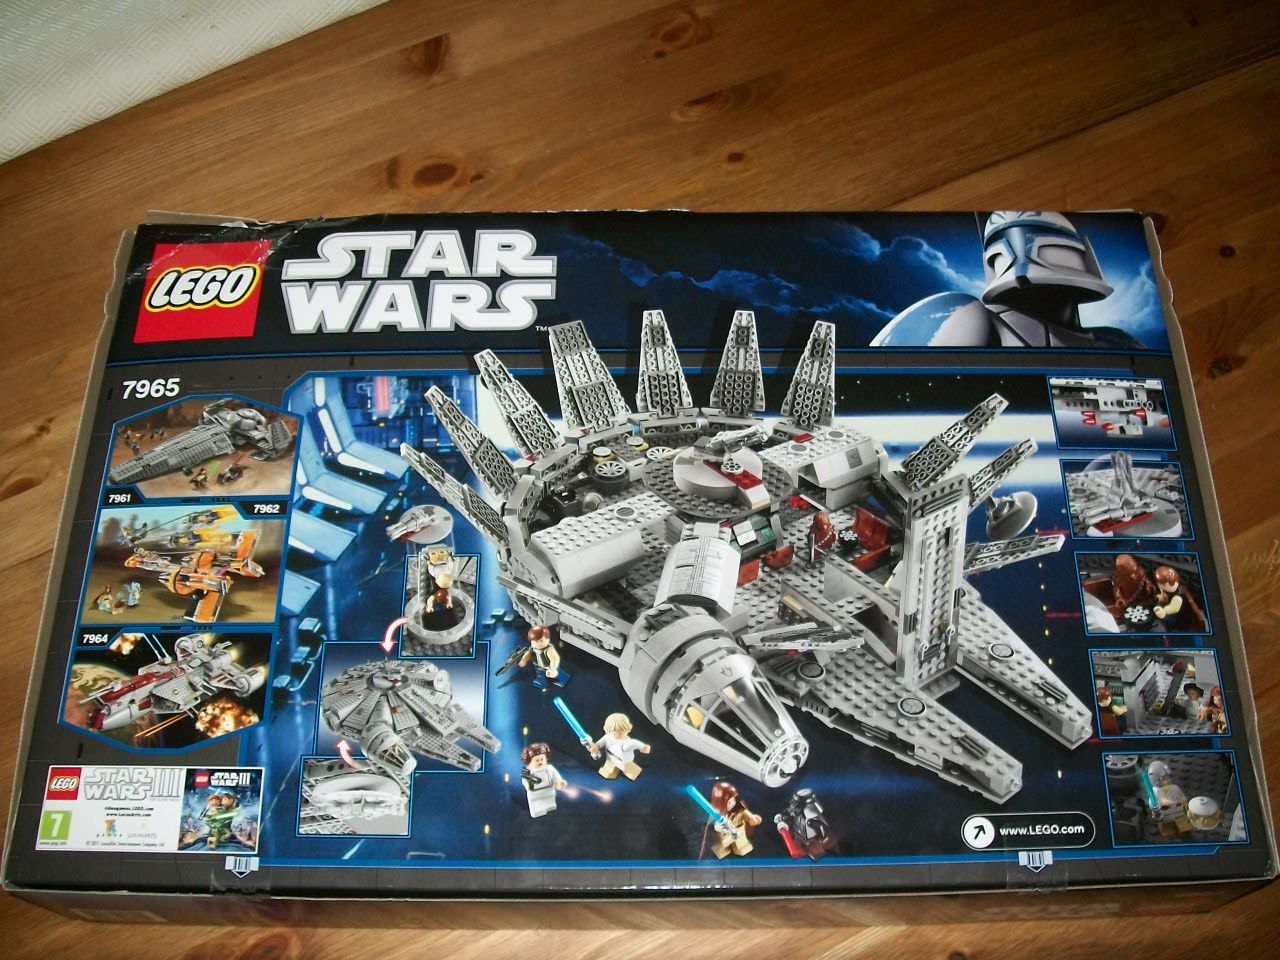 Revue du set LEGO Star Wars 7965 - Lego(R) by Alkinoos